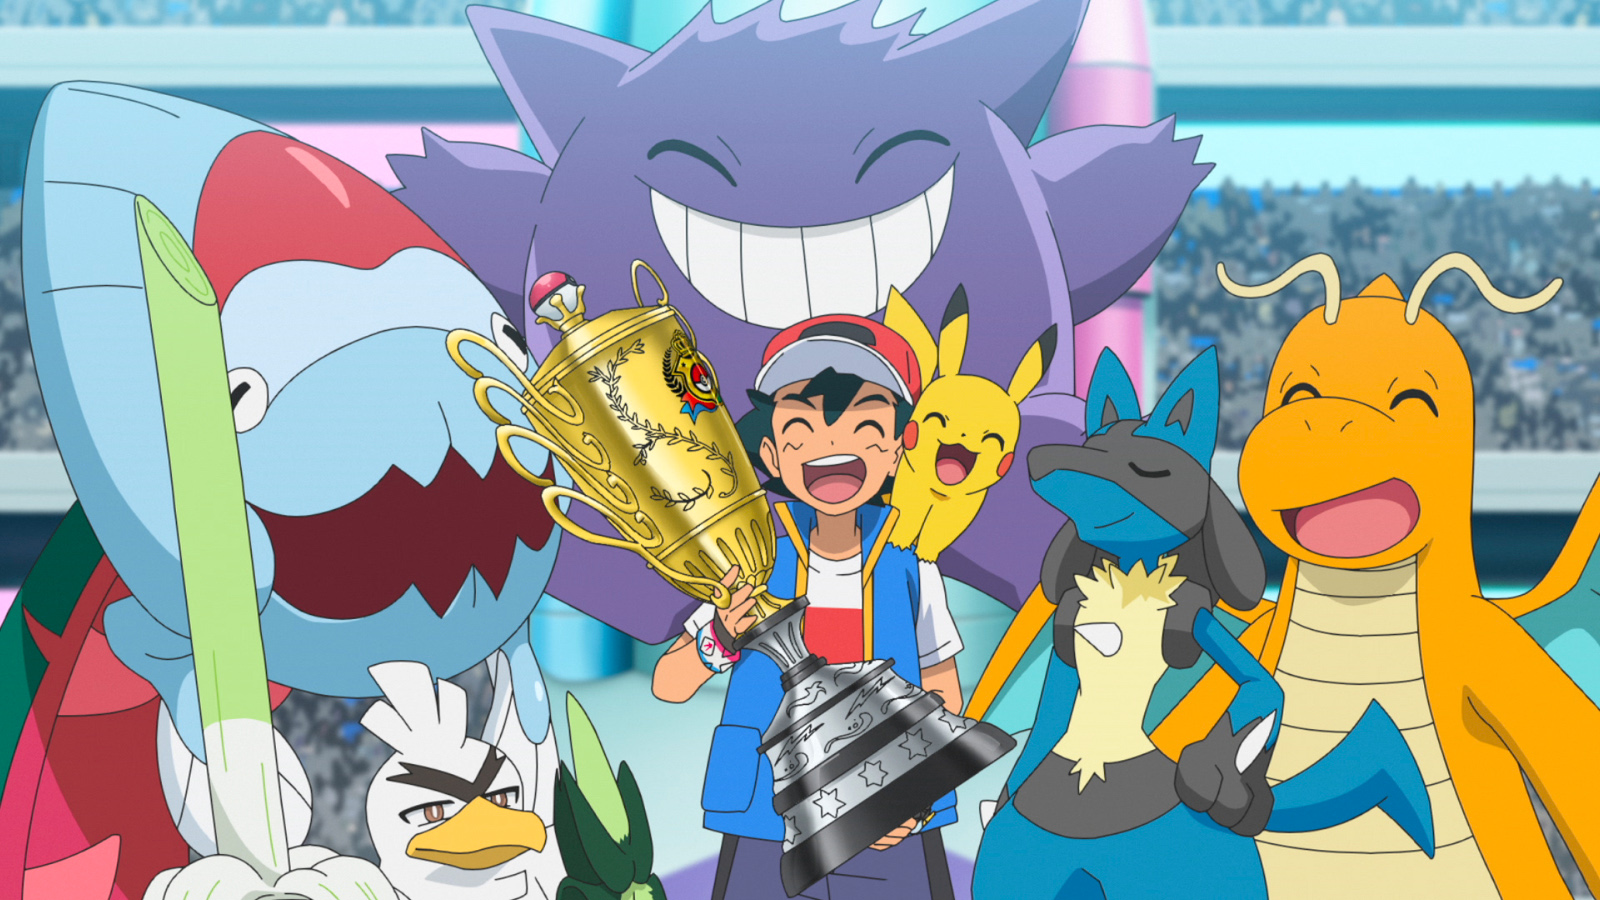 Ash does it, finally becomes Pokémon world champ